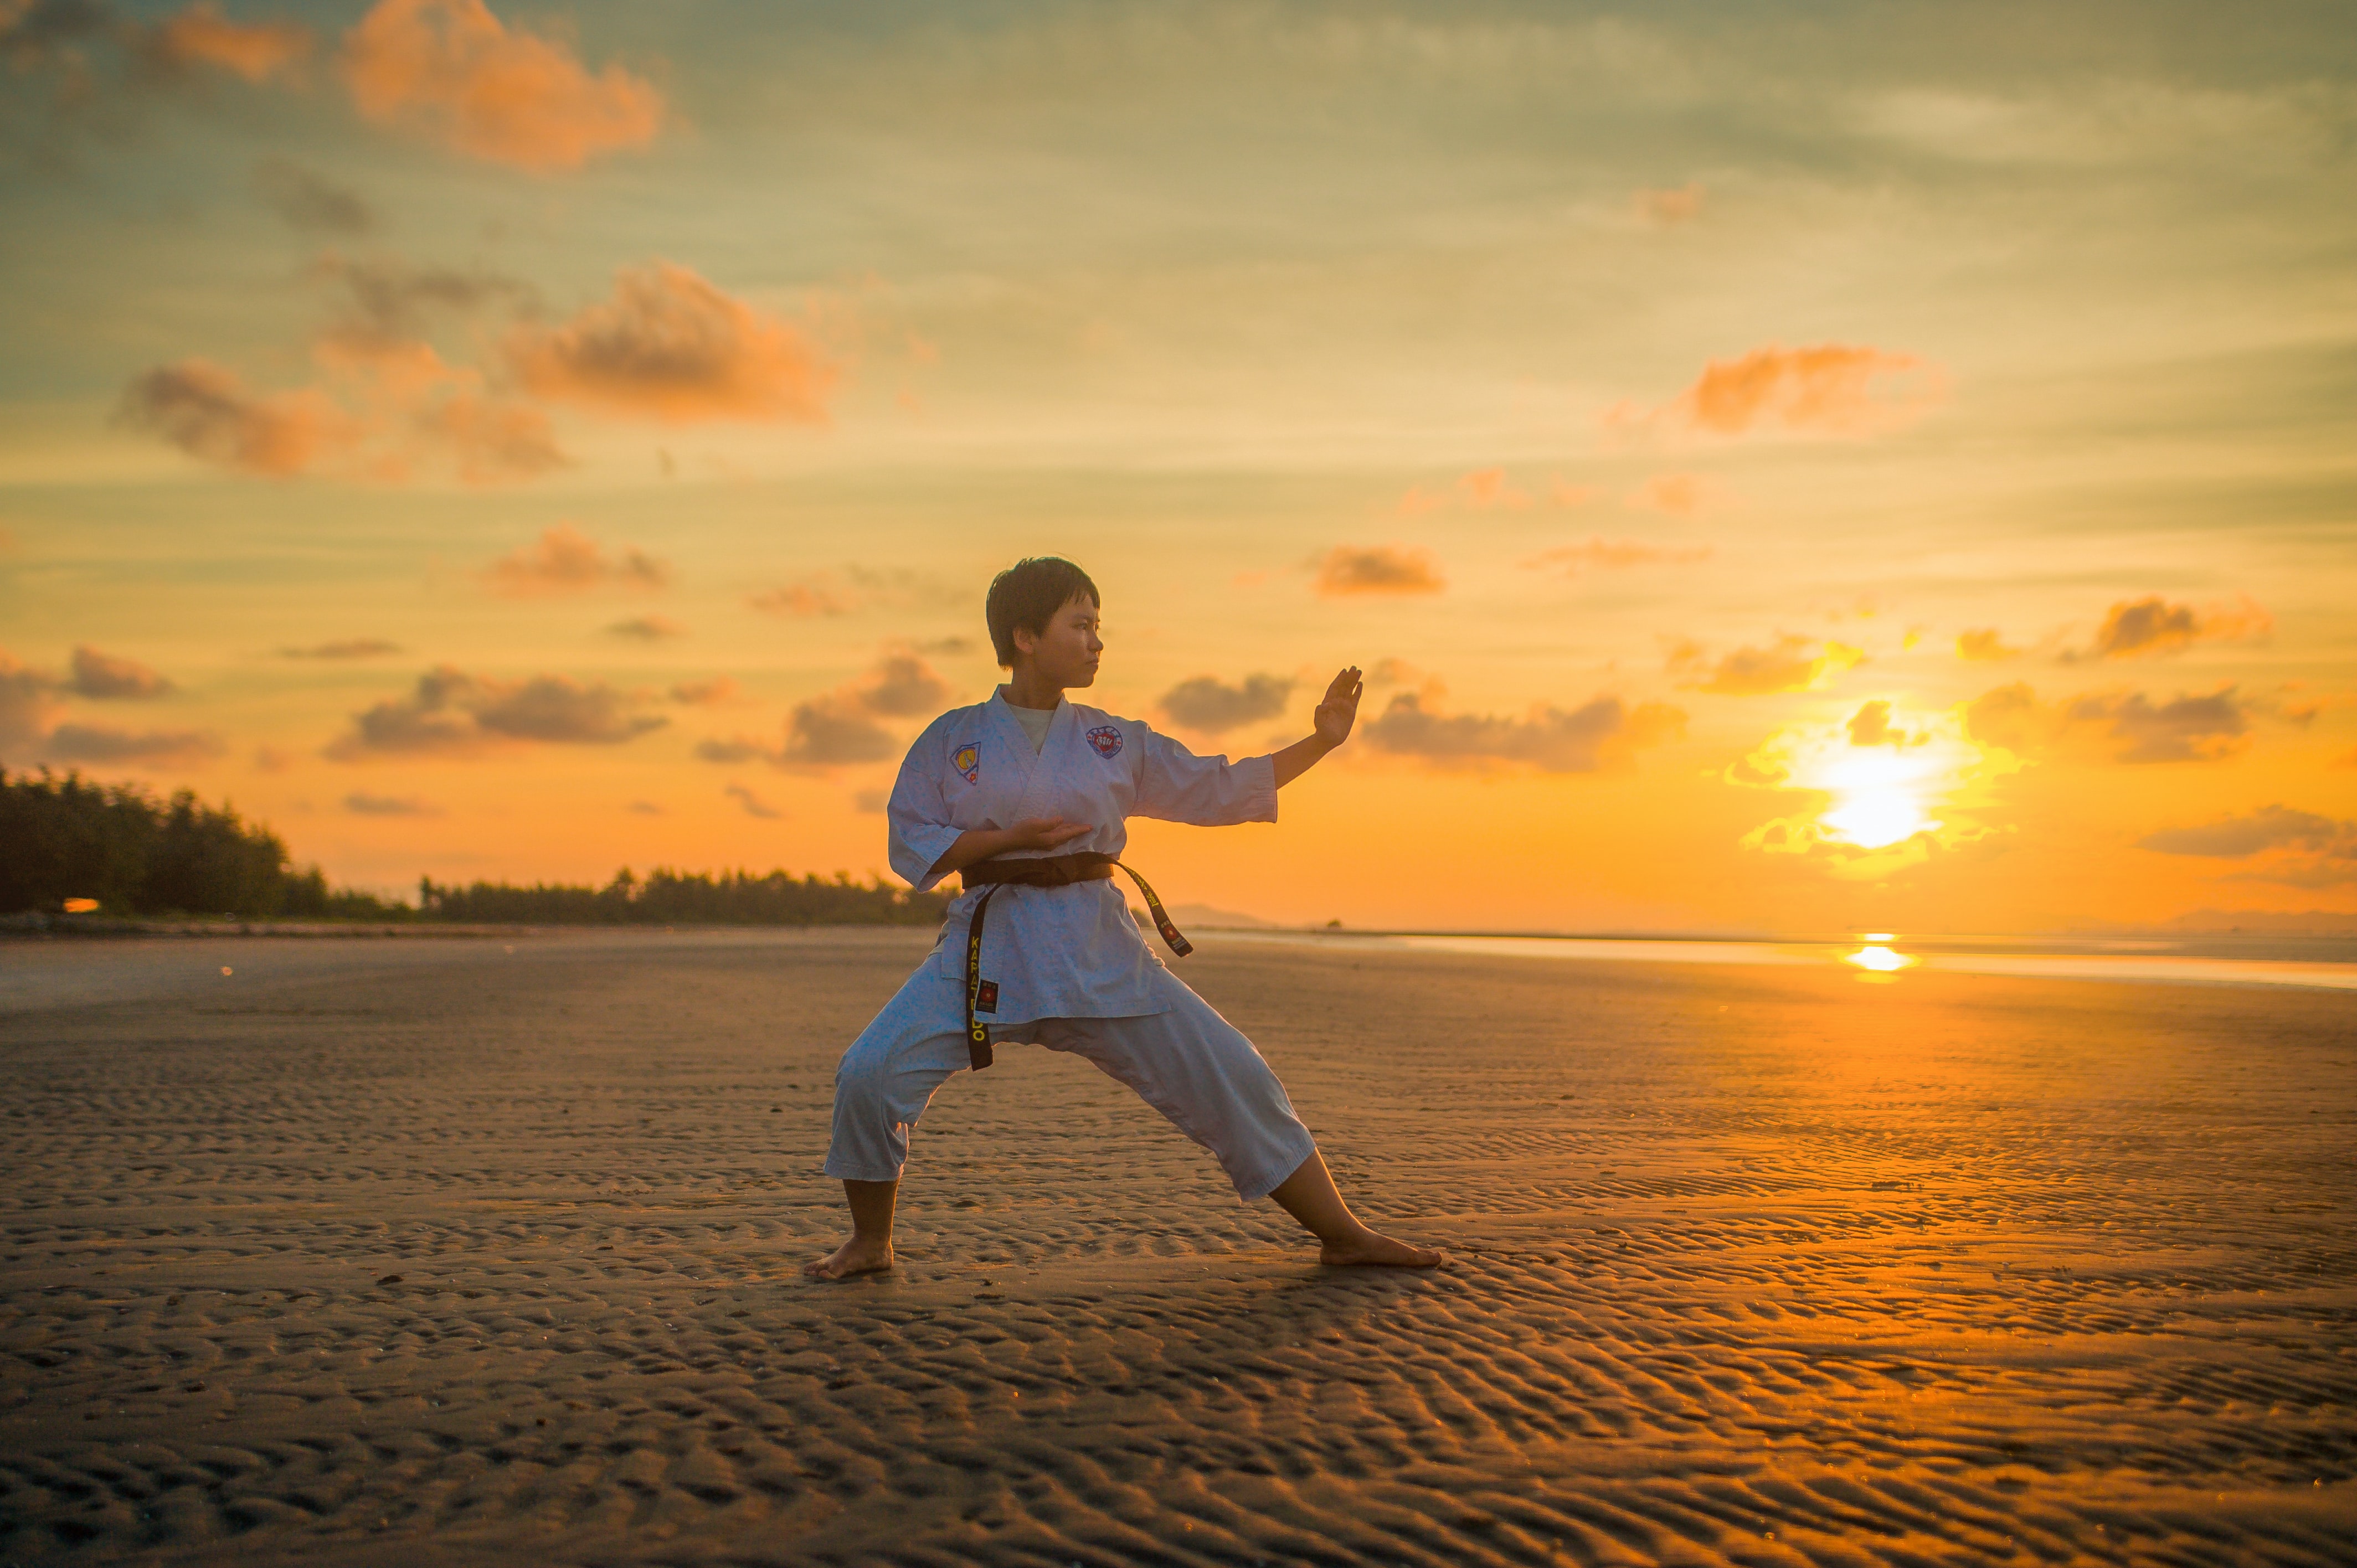 Masters Division of Abu Dhabi World Professional Jiu-Jitsu Championship dominated by Brazil